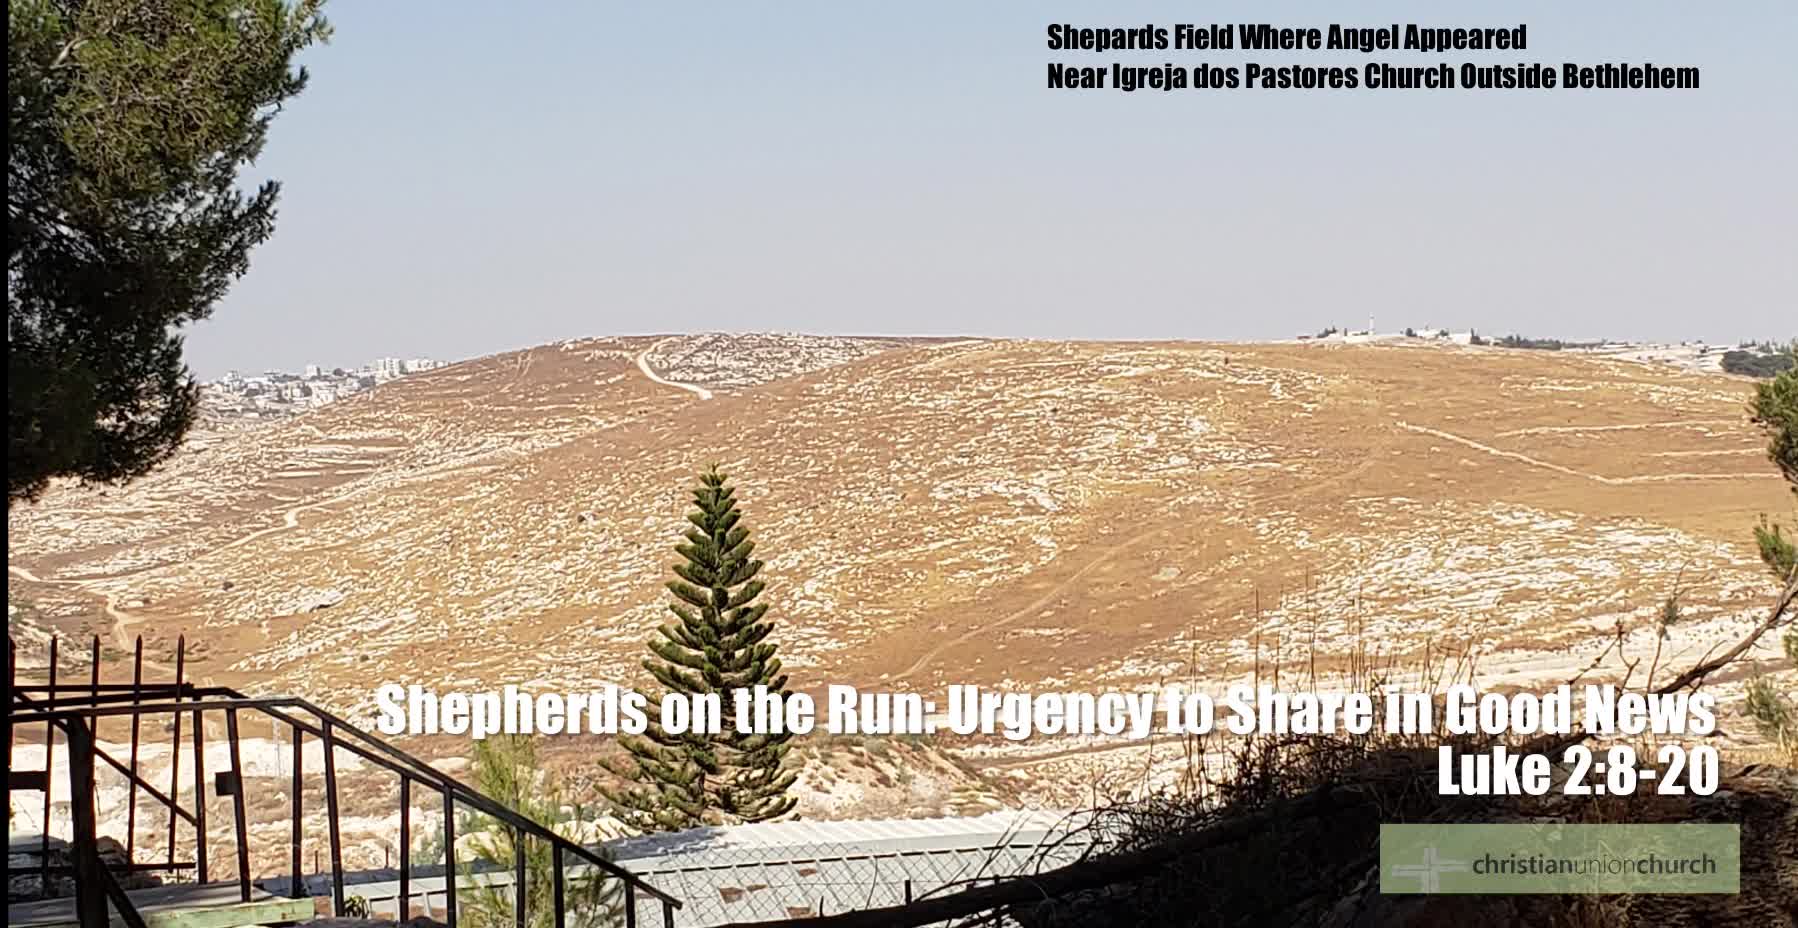 Shepherds on the Run